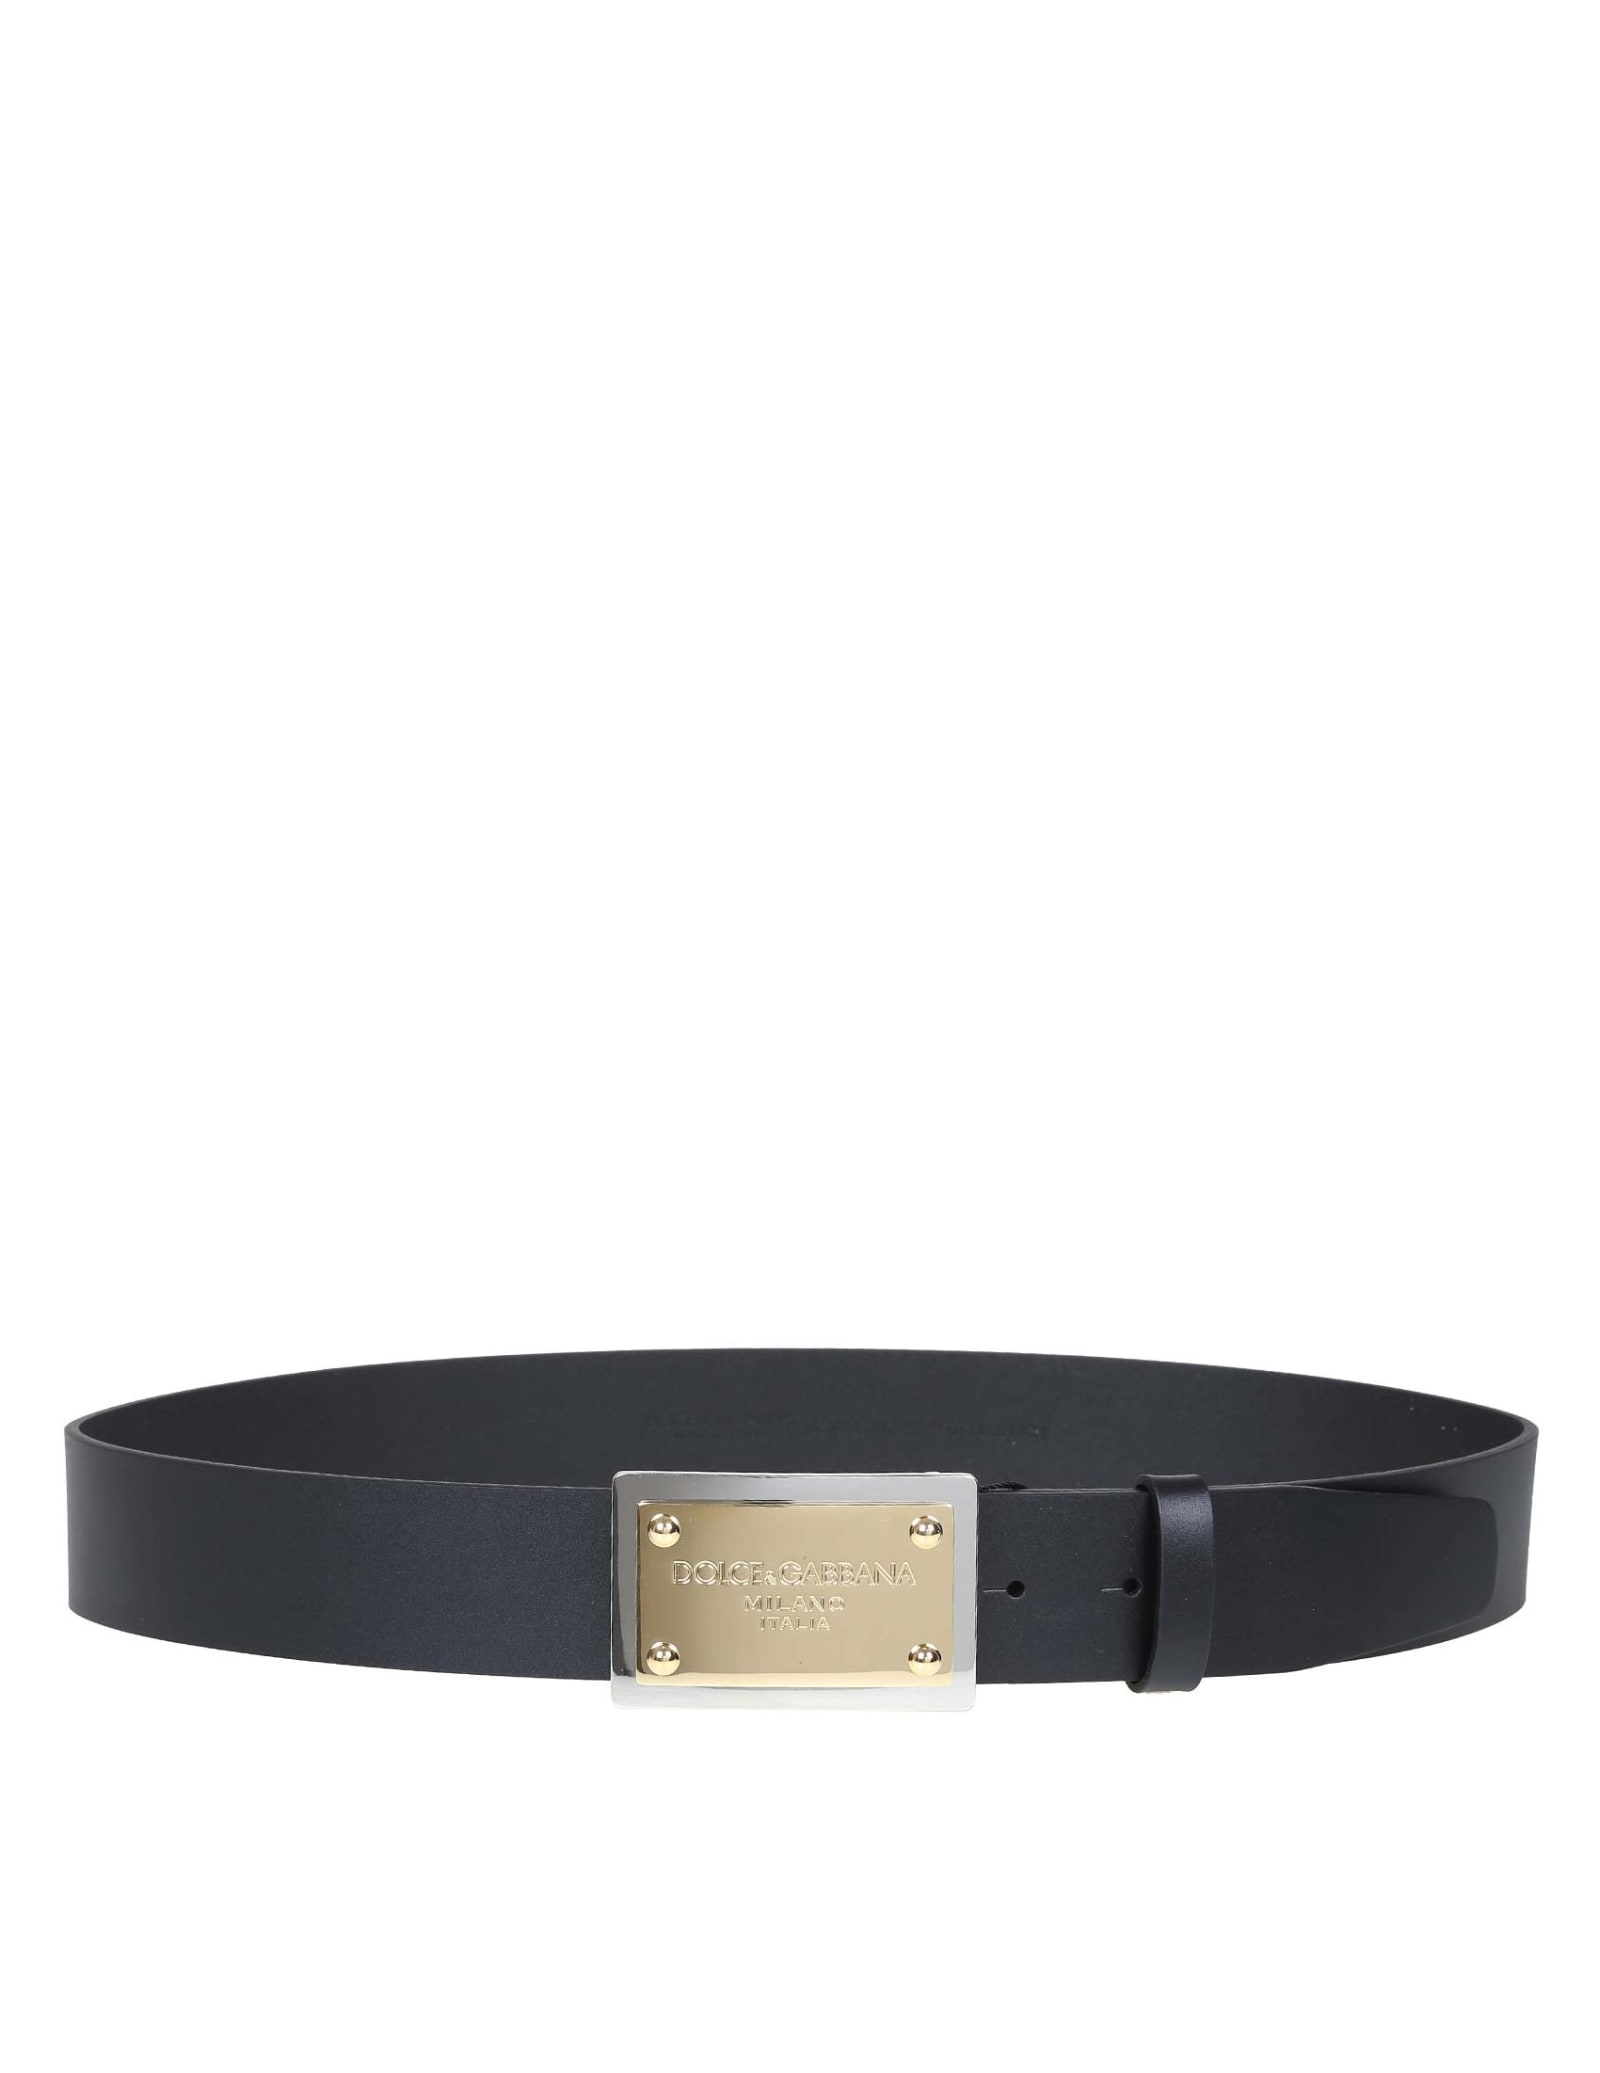 dolce & gabbana belt with logo buckle